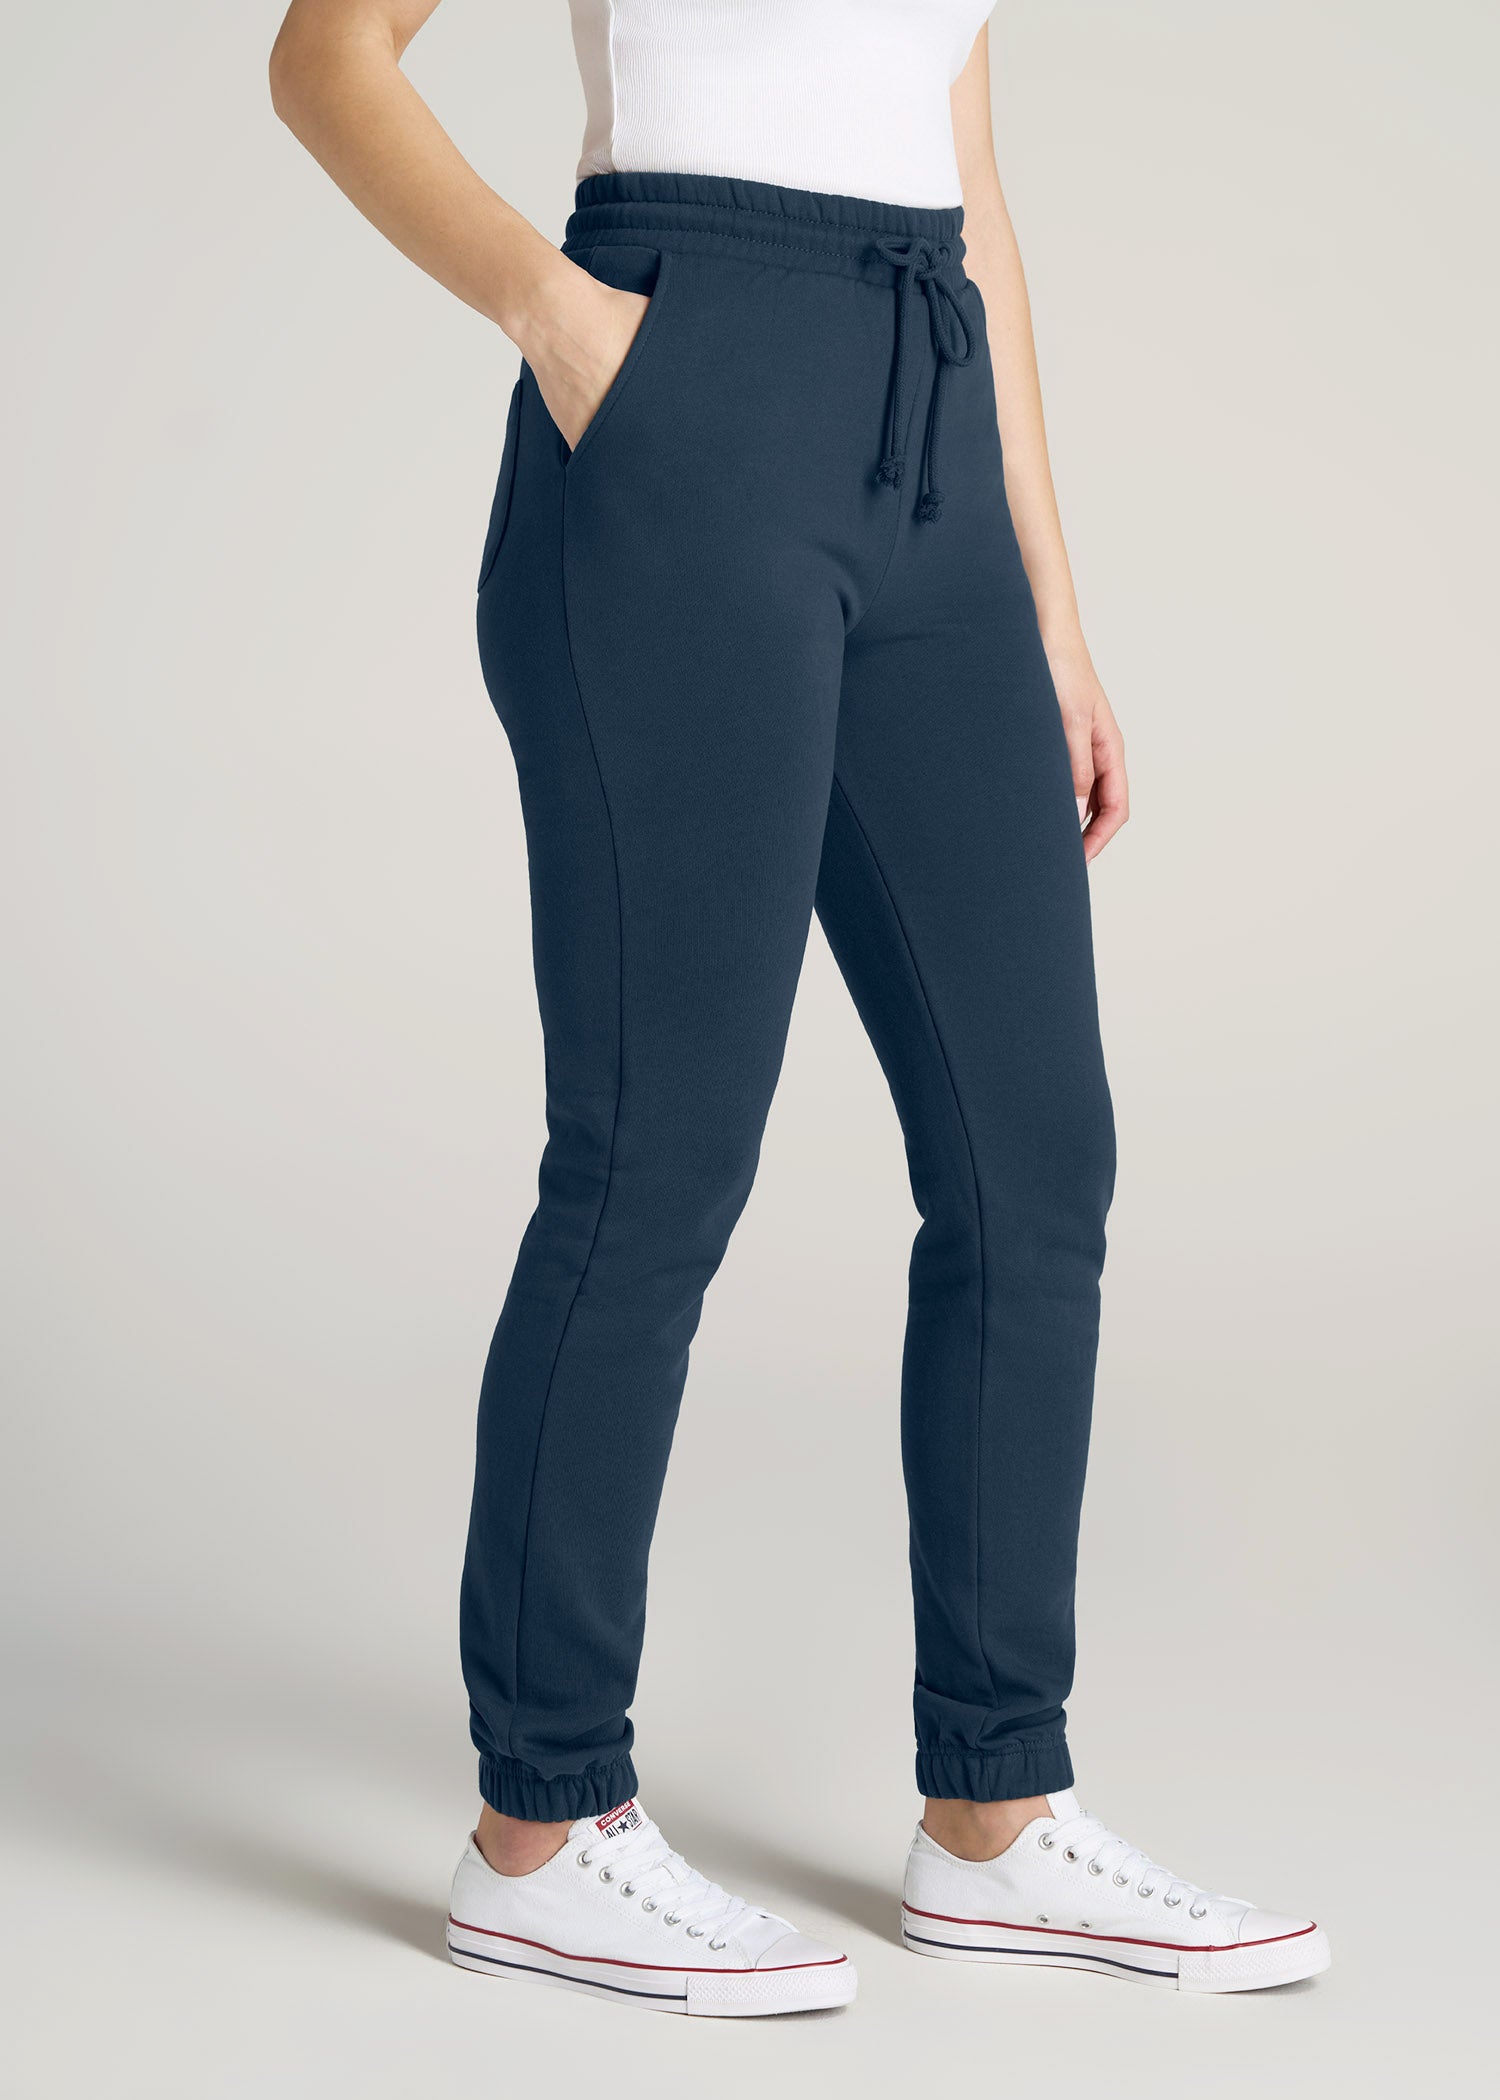       American-Tall-Women-Wearever-SLIM-High-Waisted-Garment-Dye-Sweatpants-Bright-Navy-side